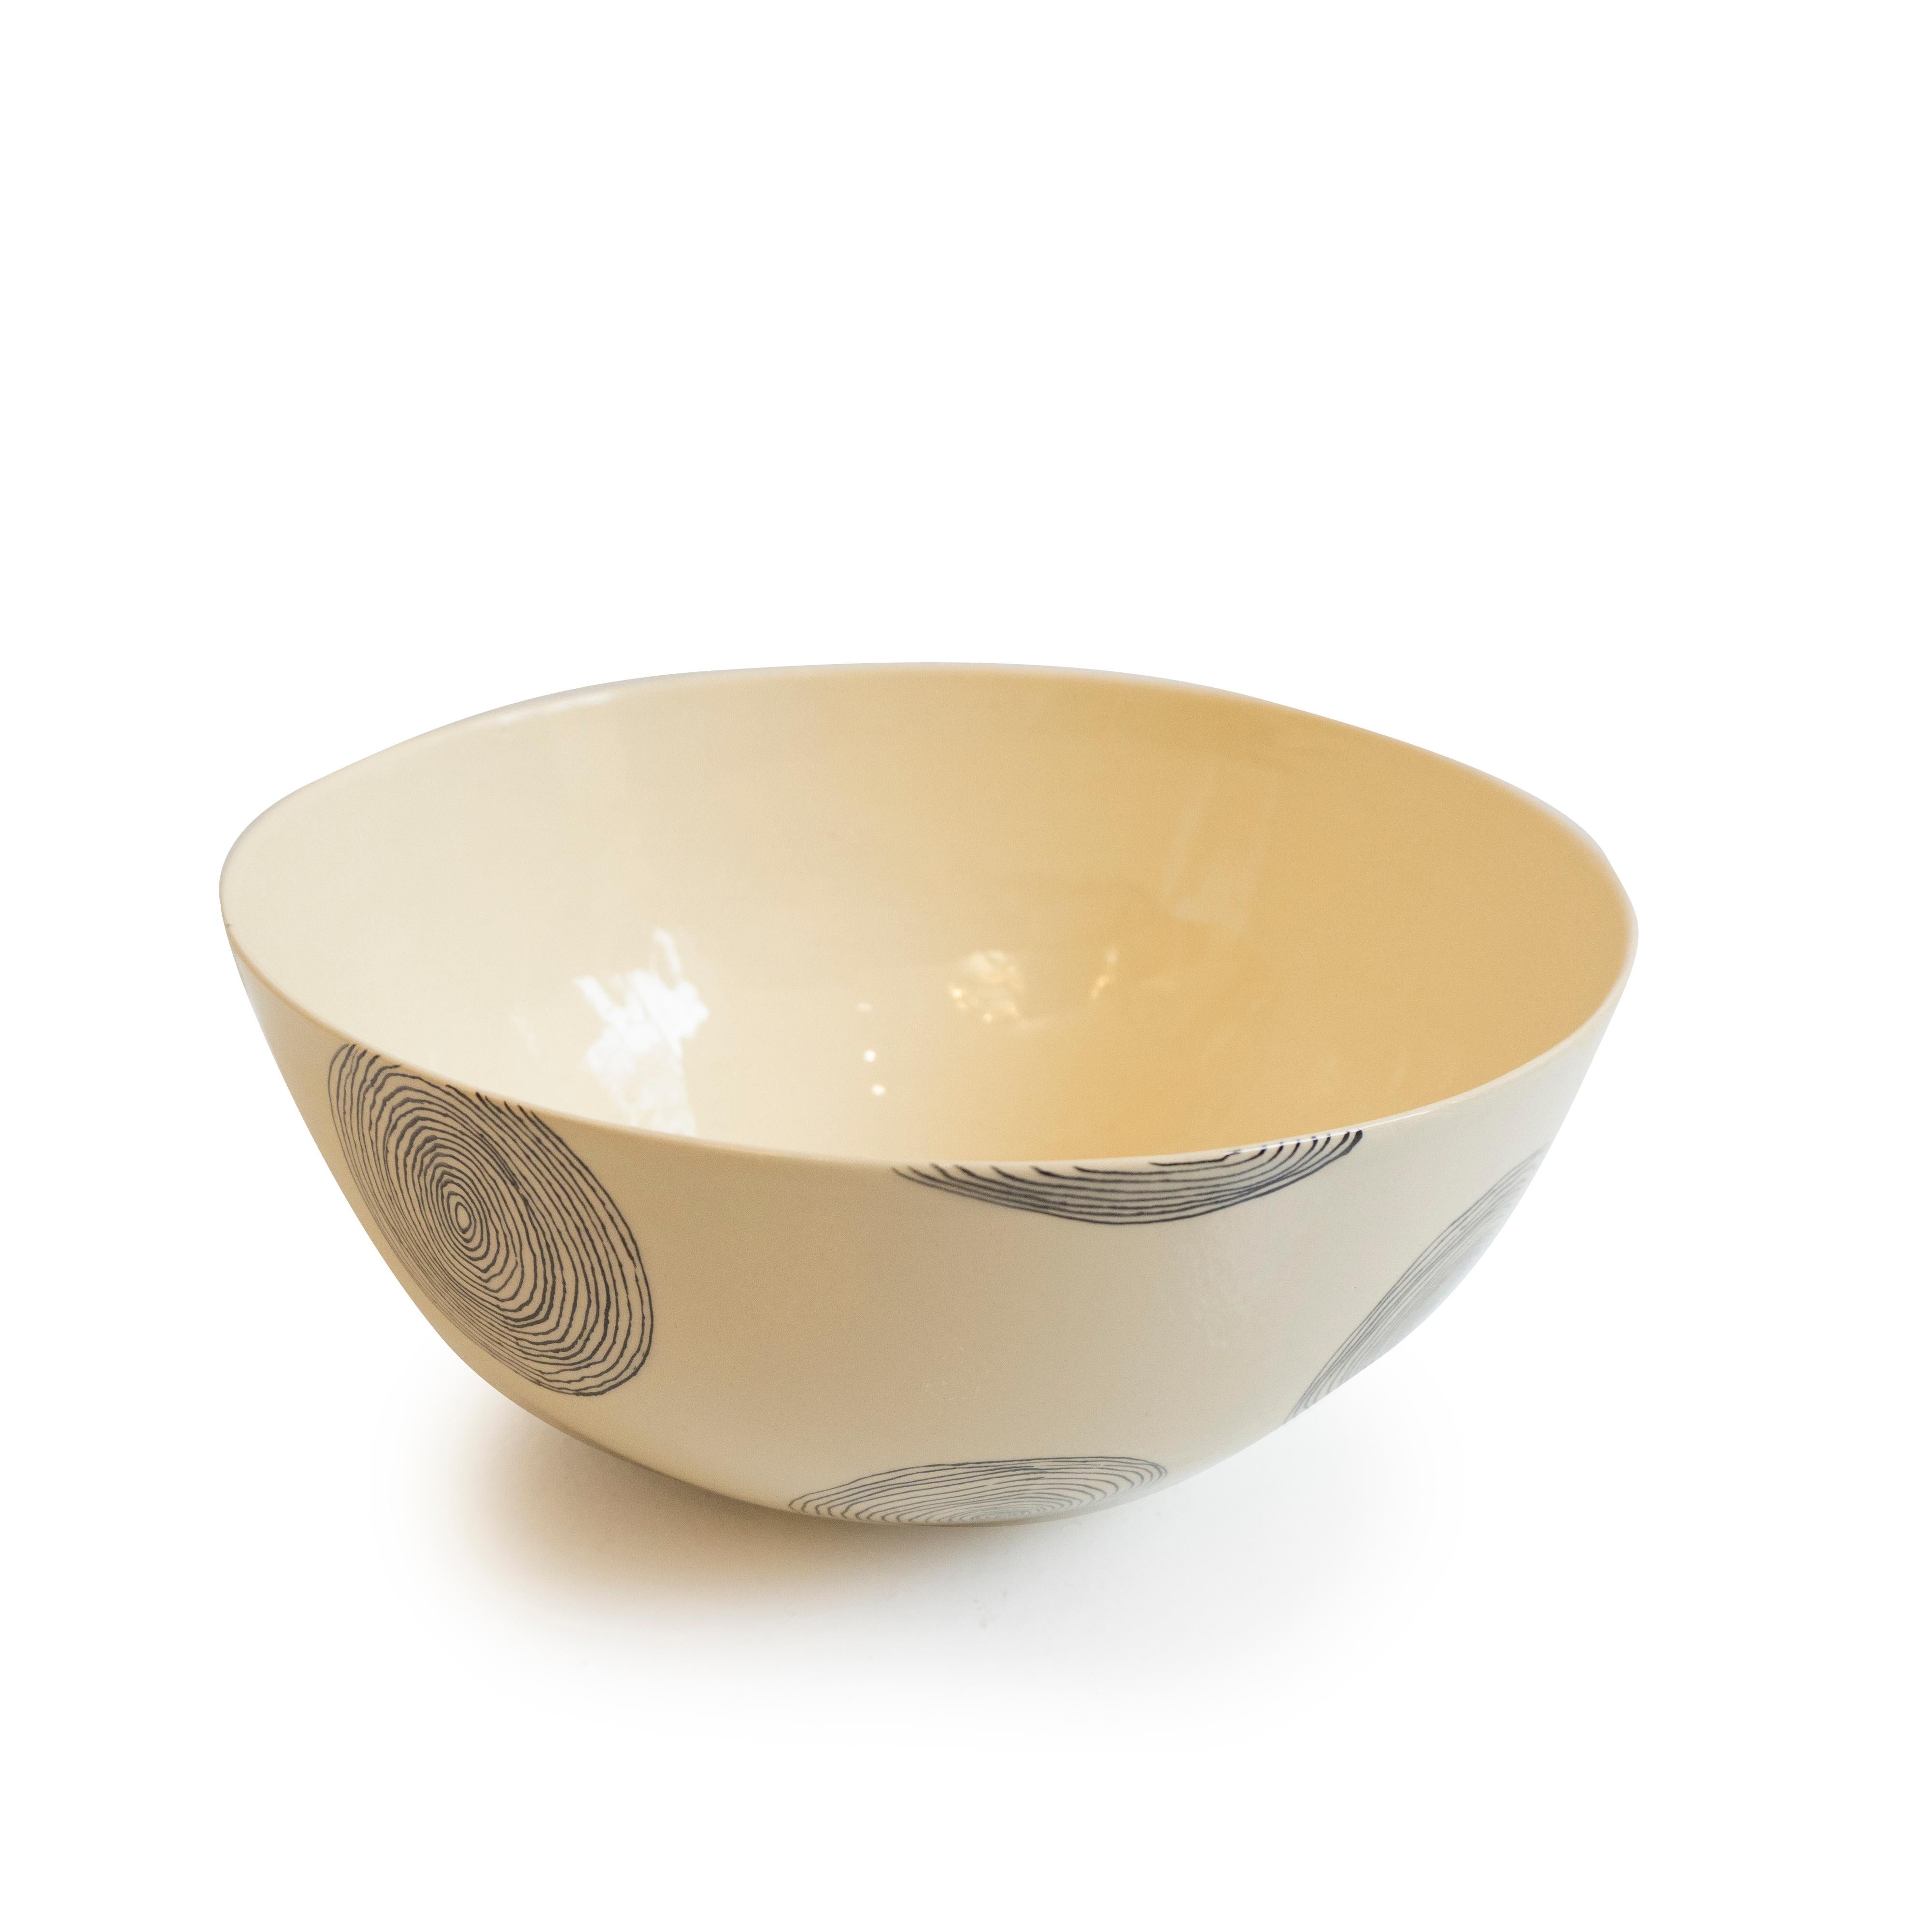 Glazed Medium Sized Ceramic Bowl with Swirling Design